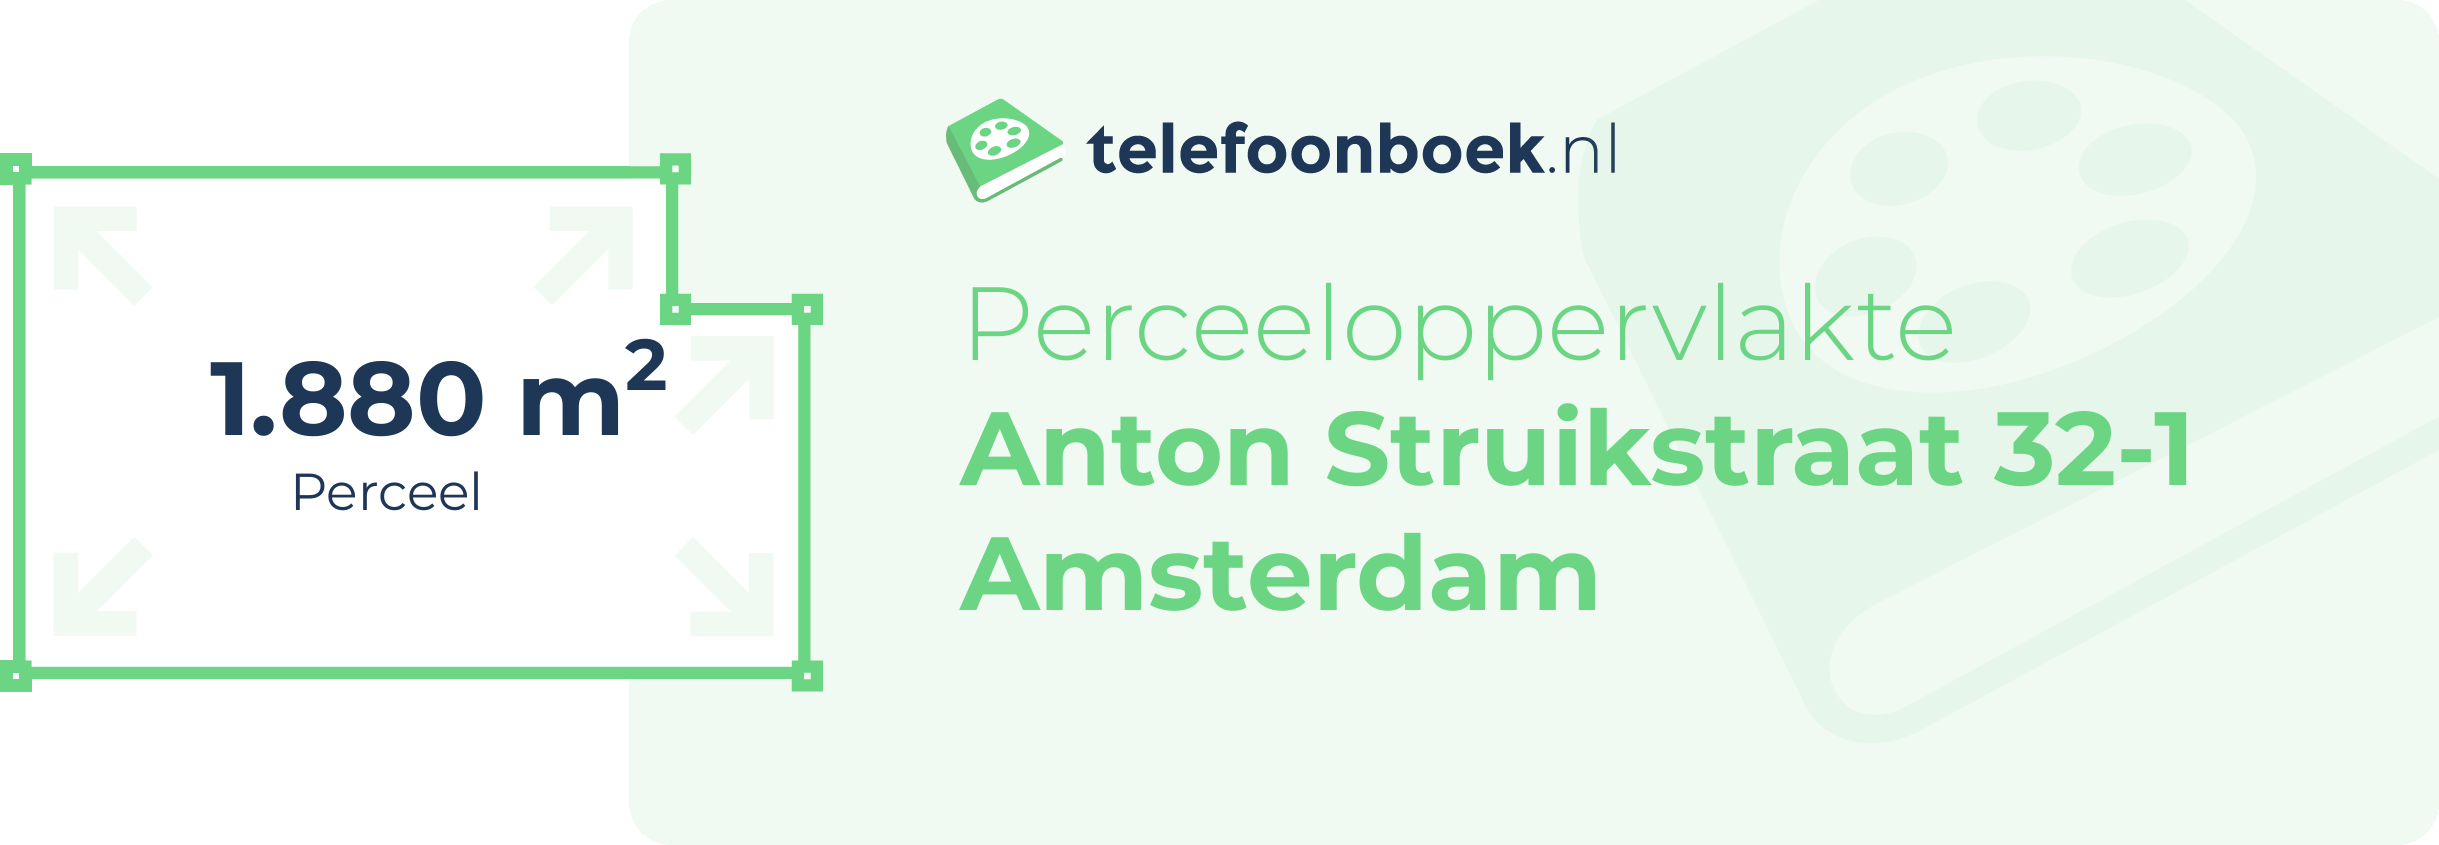 Perceeloppervlakte Anton Struikstraat 32-1 Amsterdam